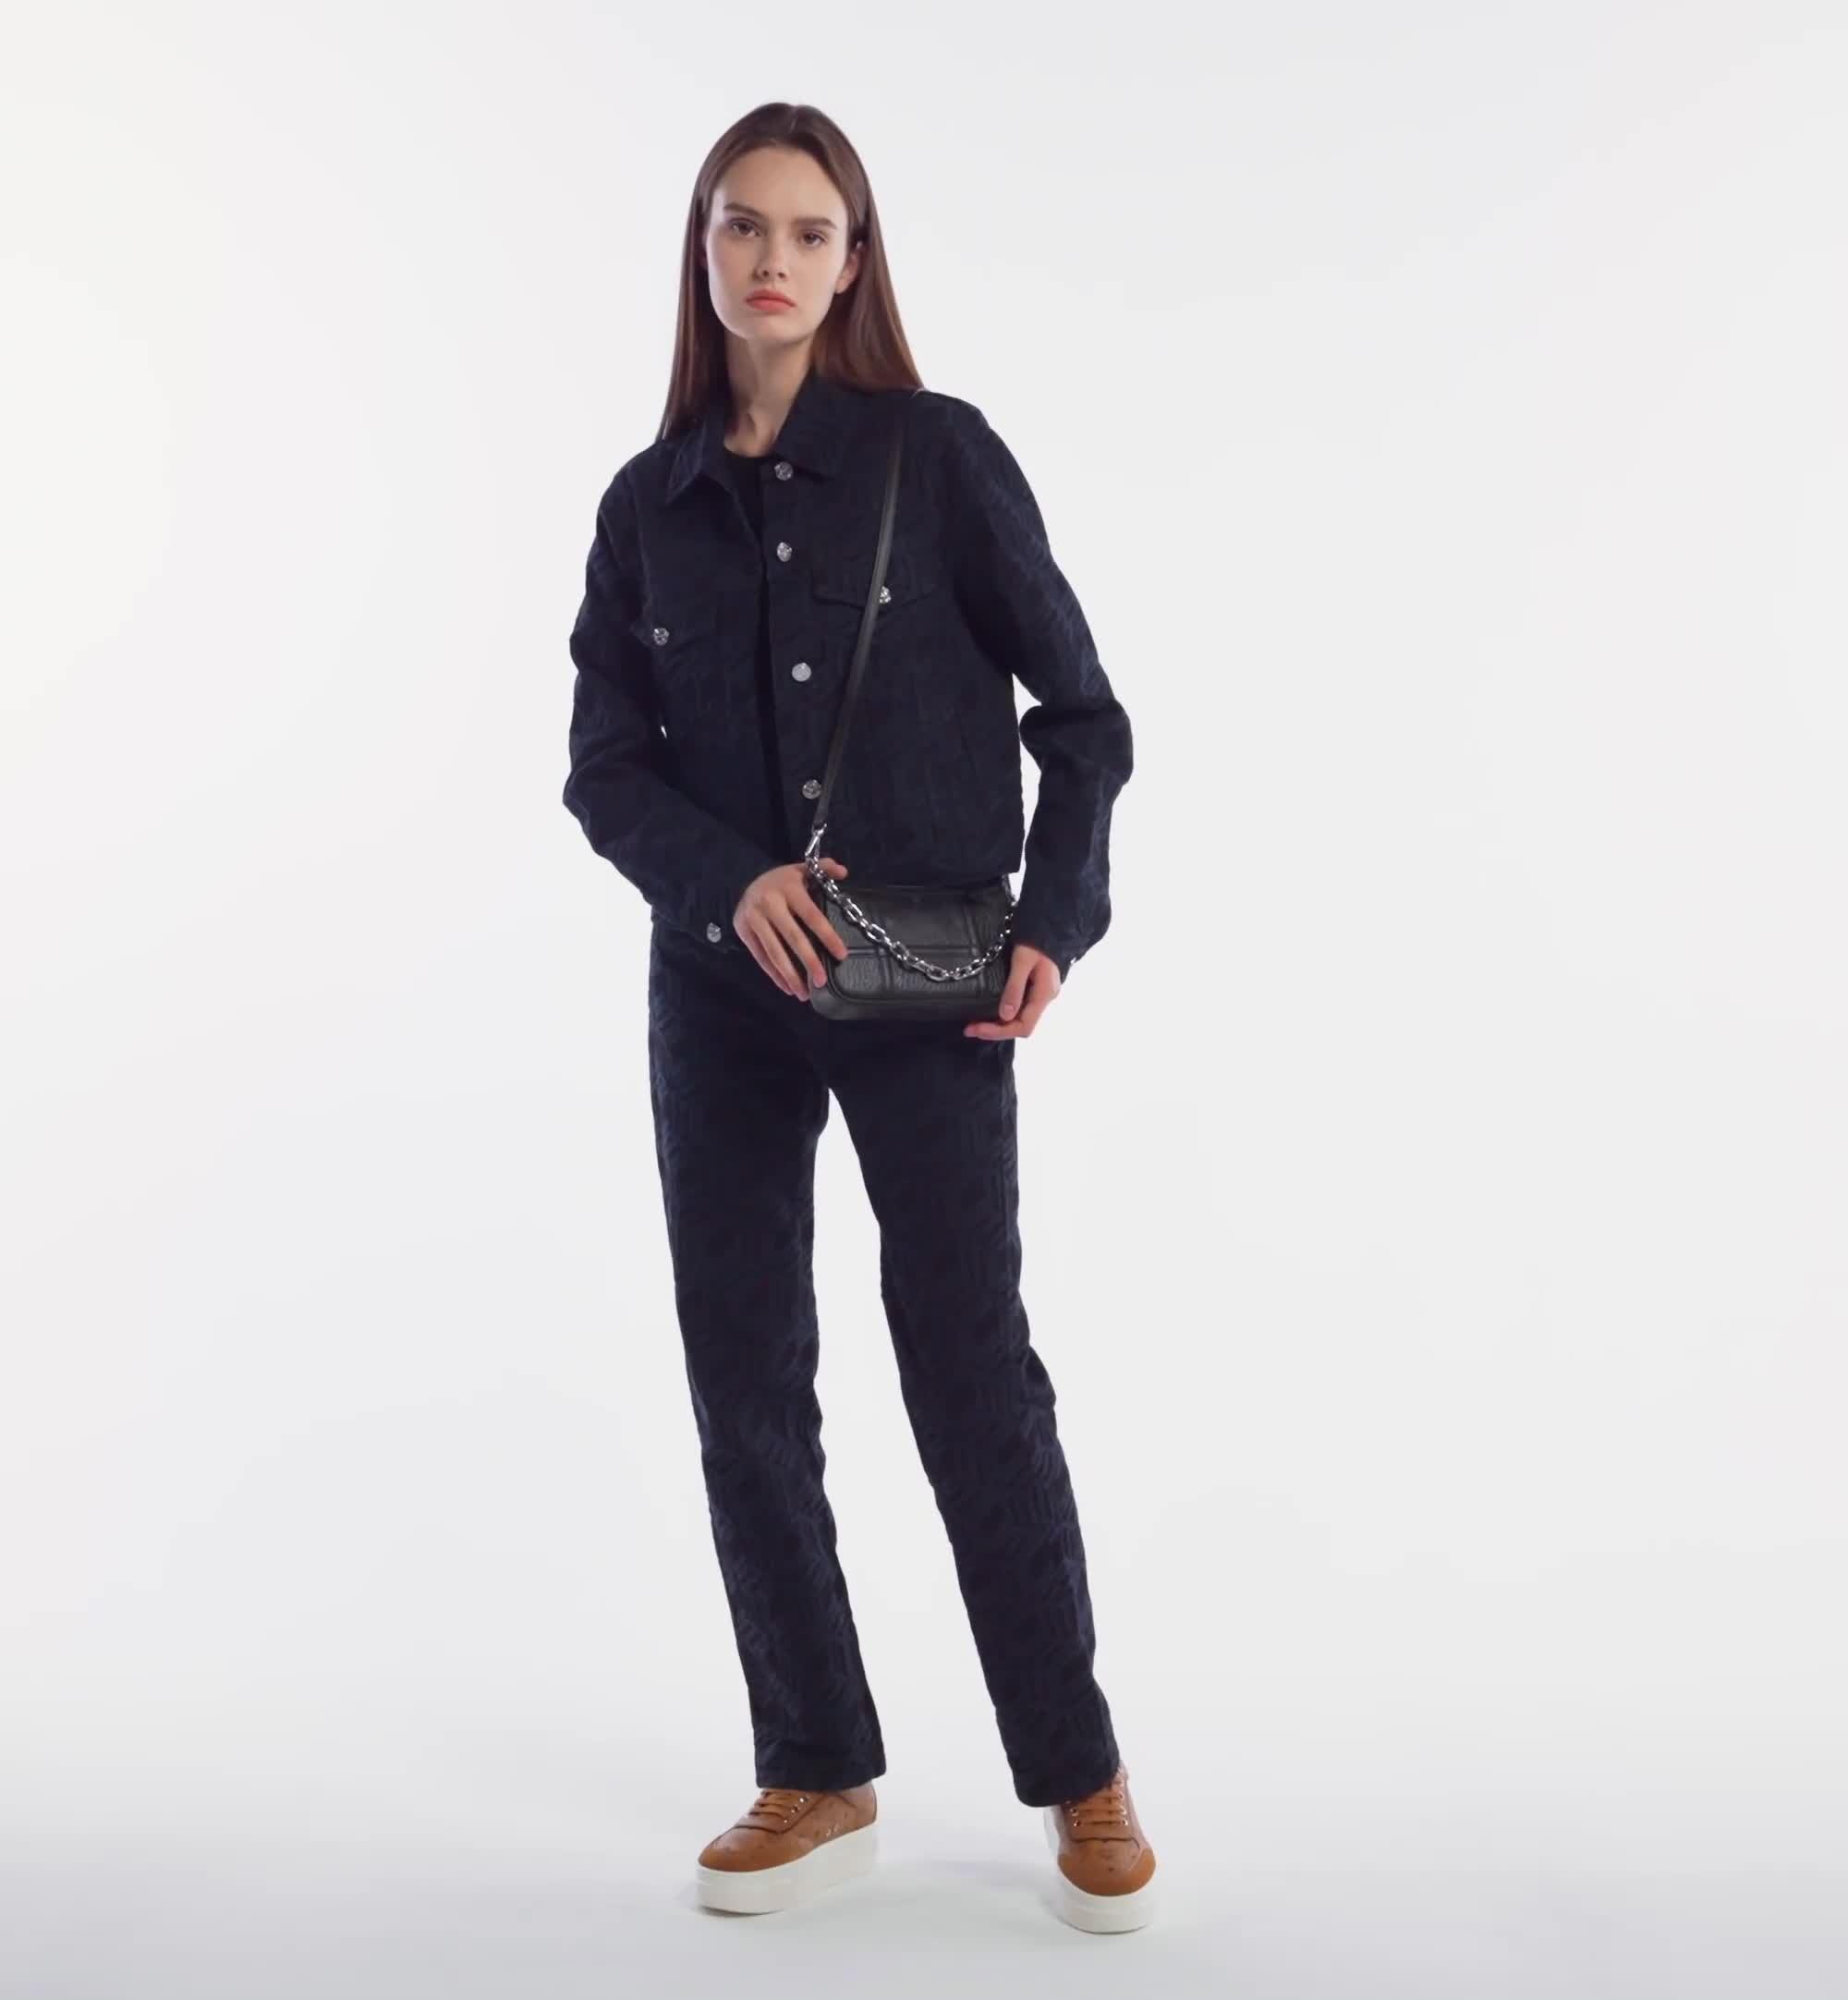 Louis Vuitton inventory haul 🚨 - MCM Mini Aren Shoulder Bag in